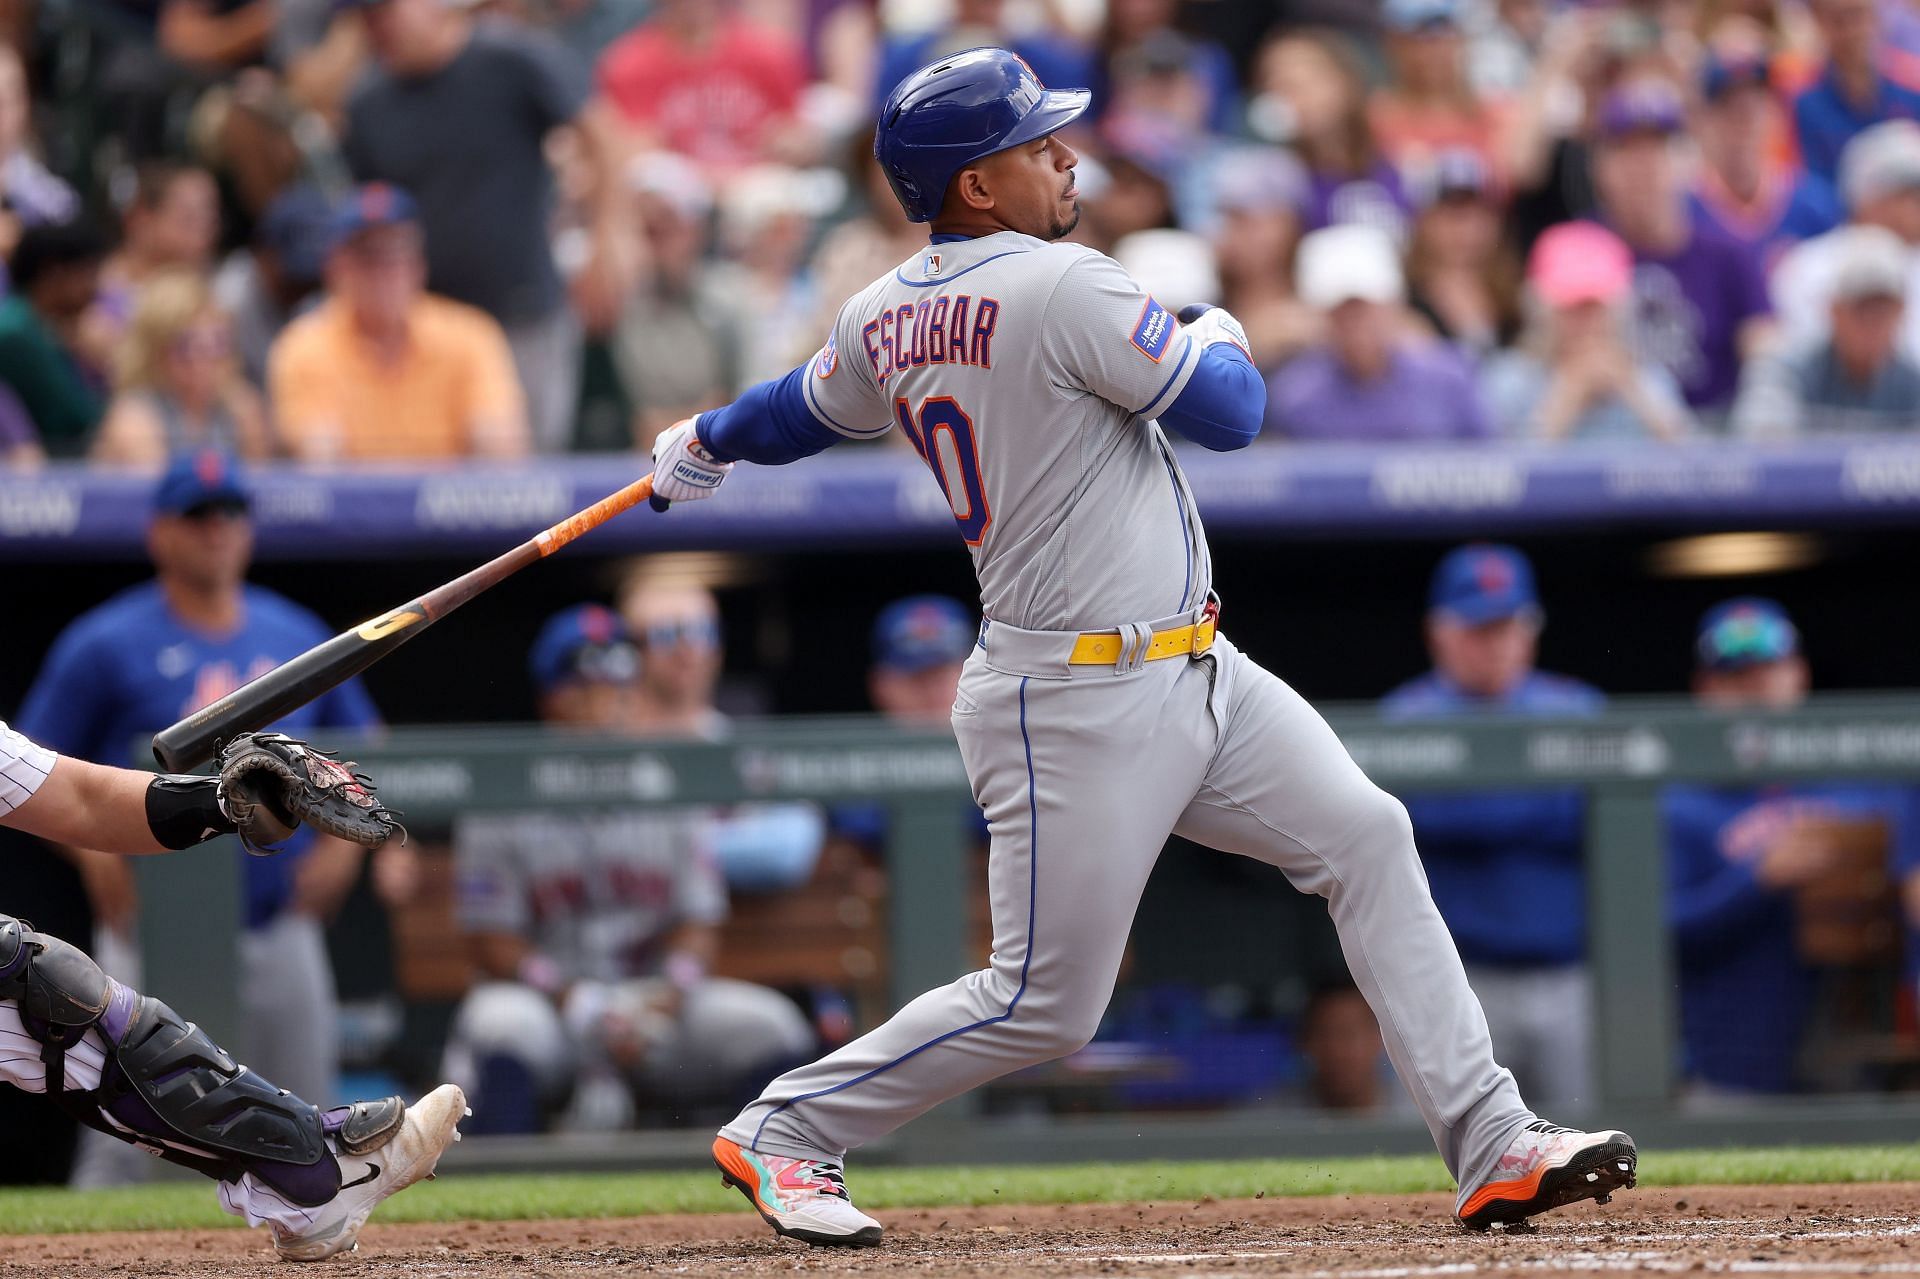 Talkin' Baseball on X: The Mets just traded Eduardo Escobar in